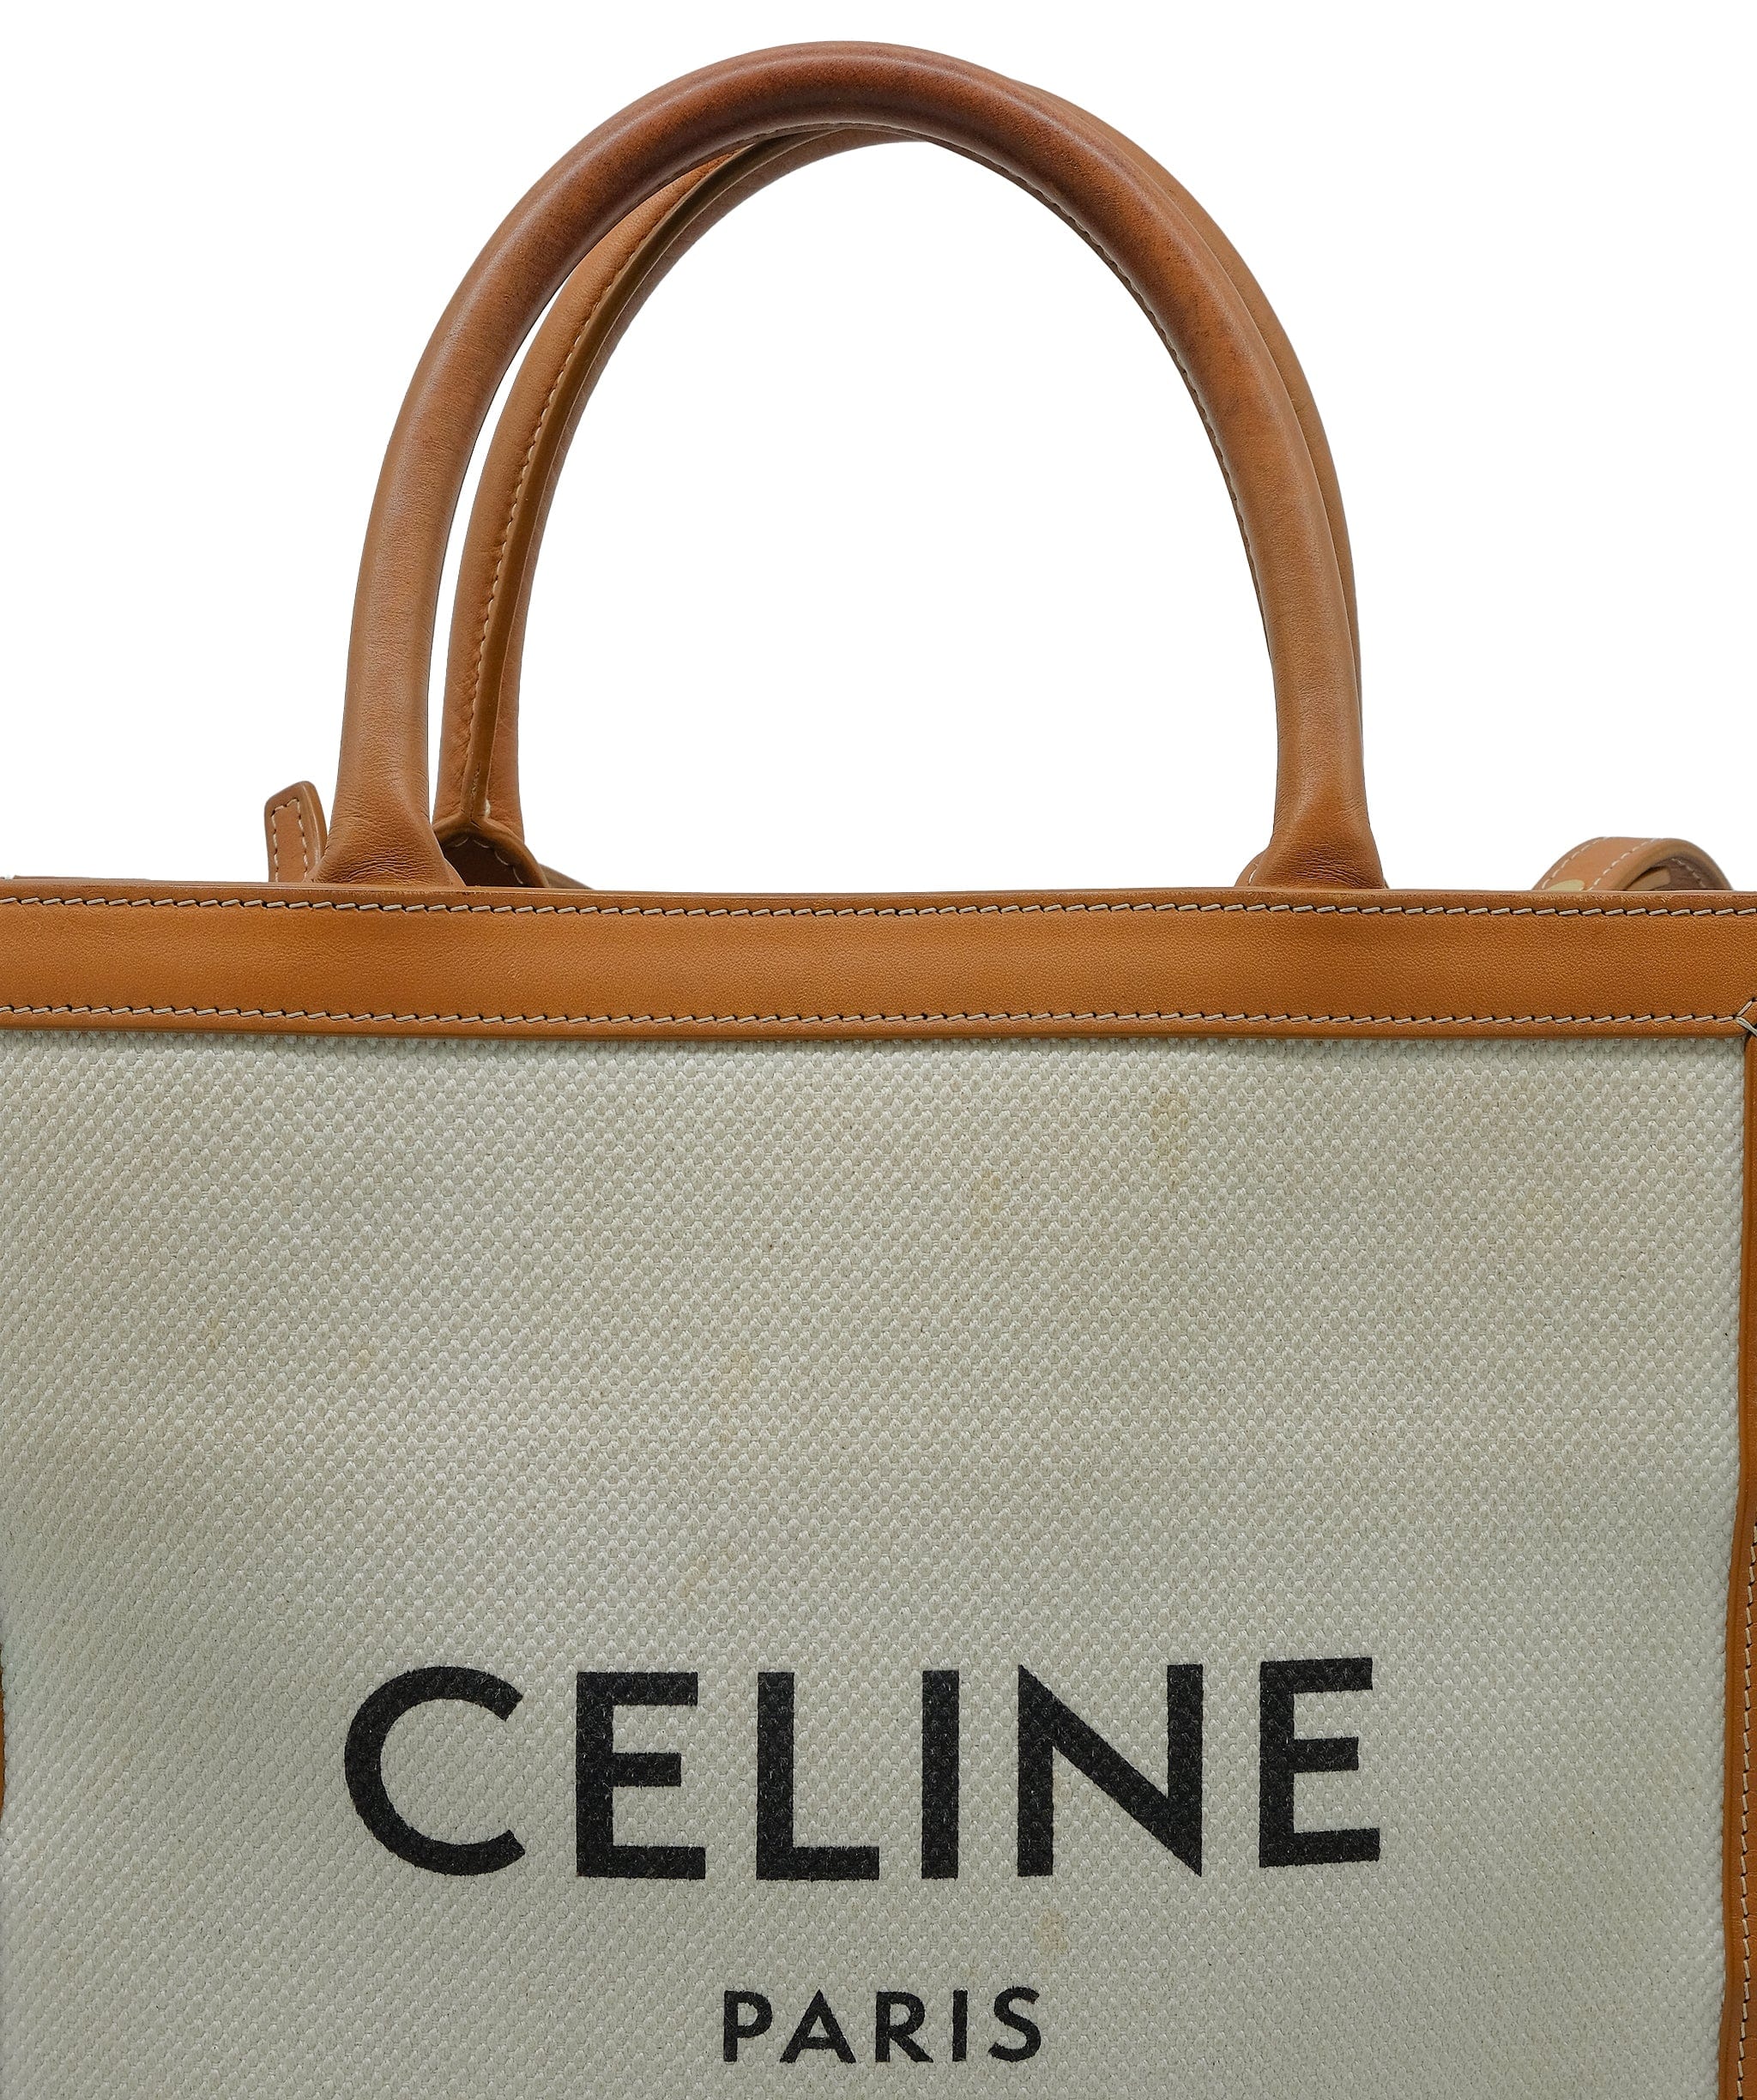 Celine Celine Tote Bag Canvas / LeatherRJC3148